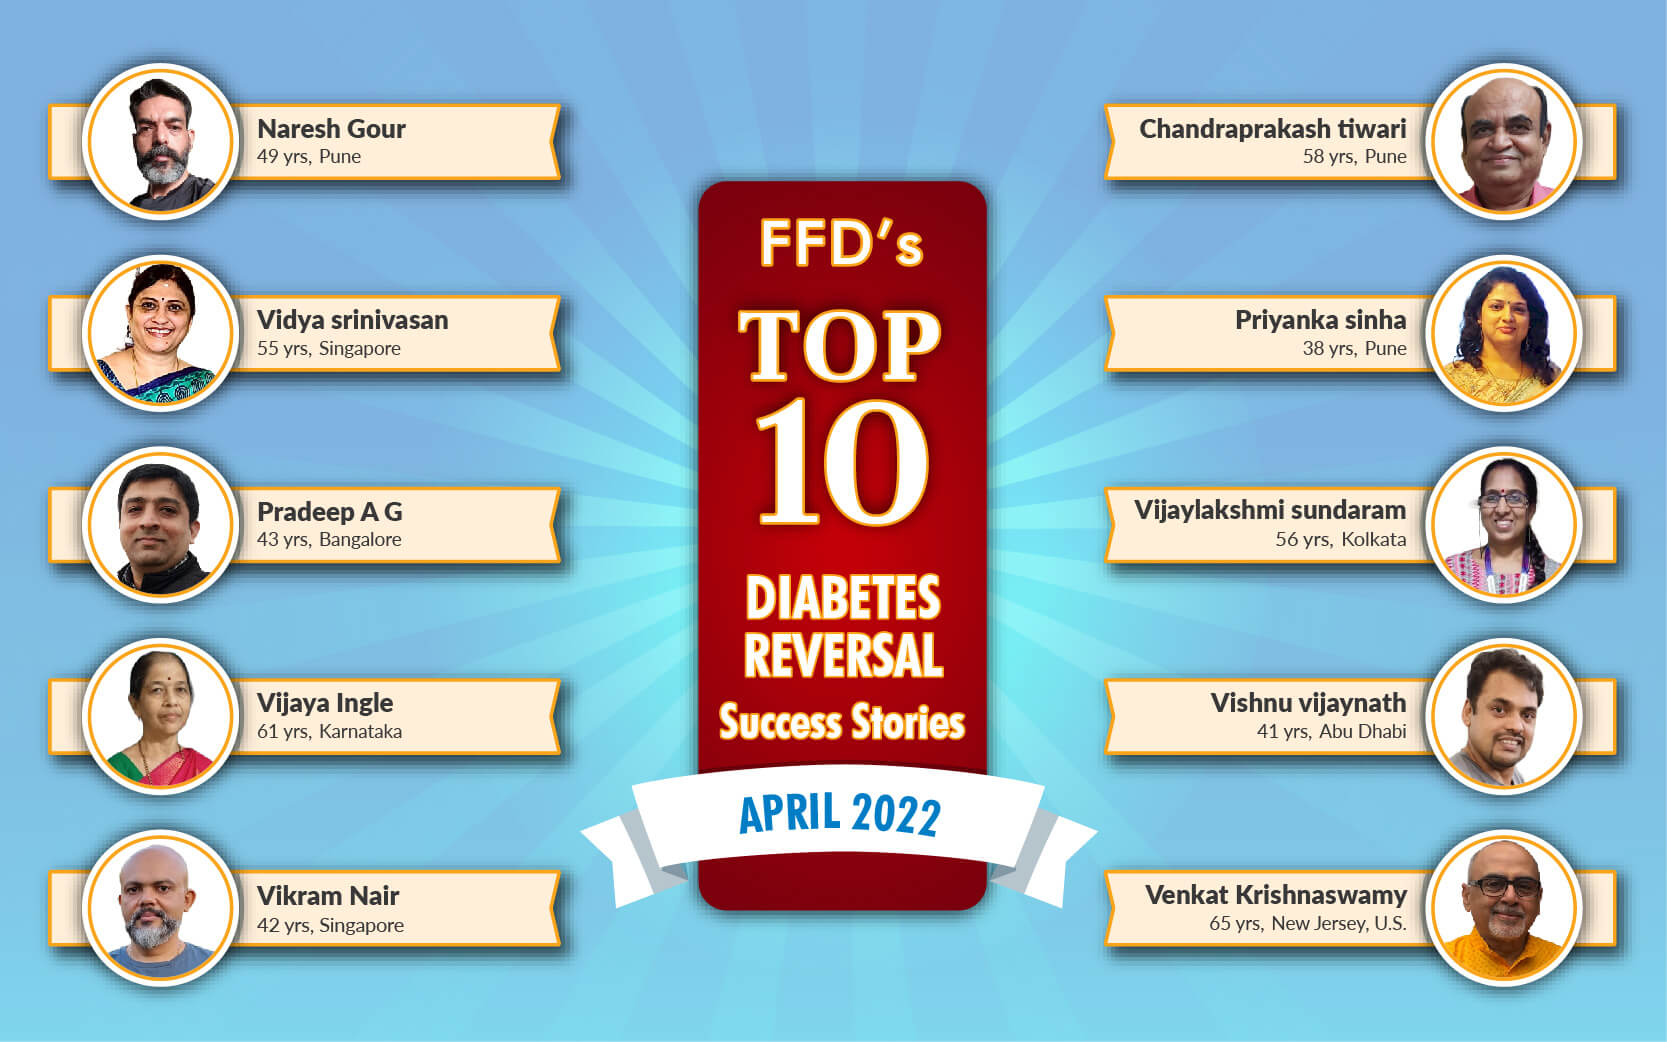 FFD's Top 10 Diabetes Reversal Success Stories of April 2022